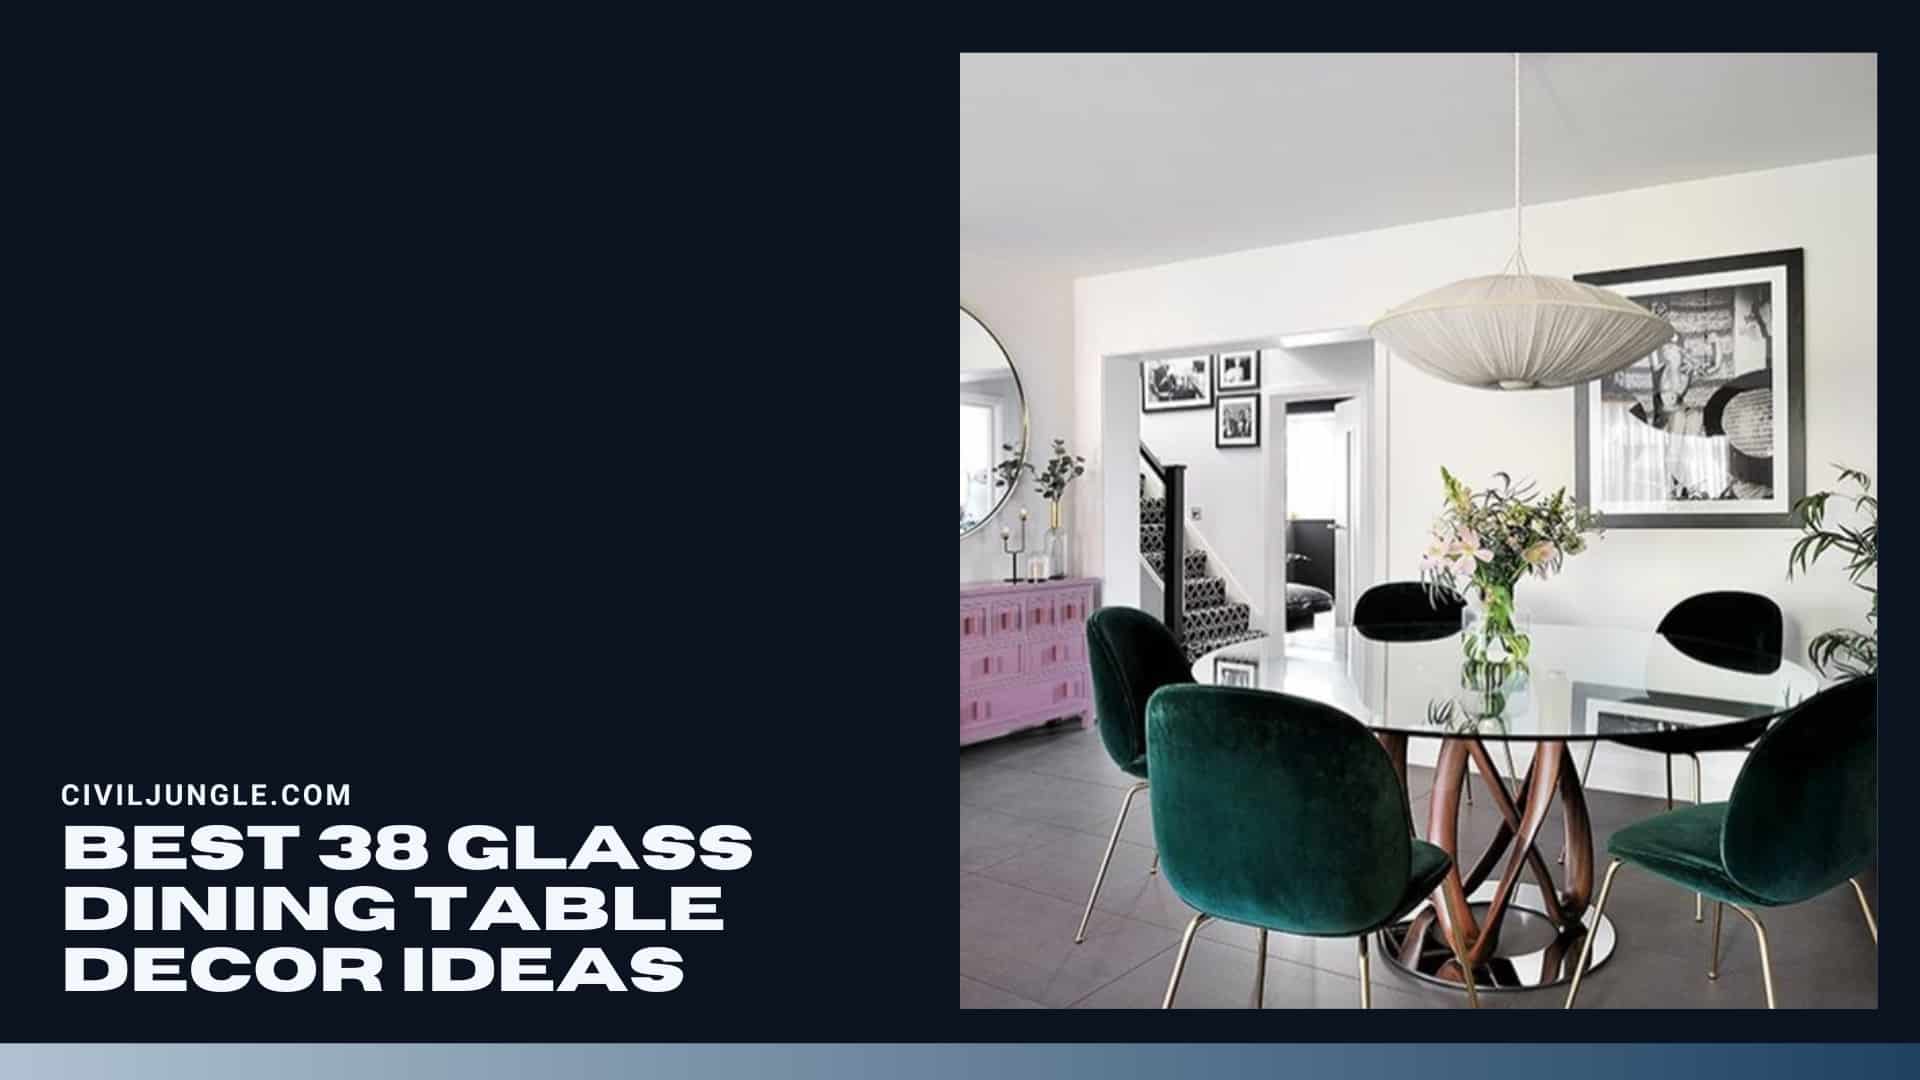 Best 38 Glass Dining Table Decor Ideas